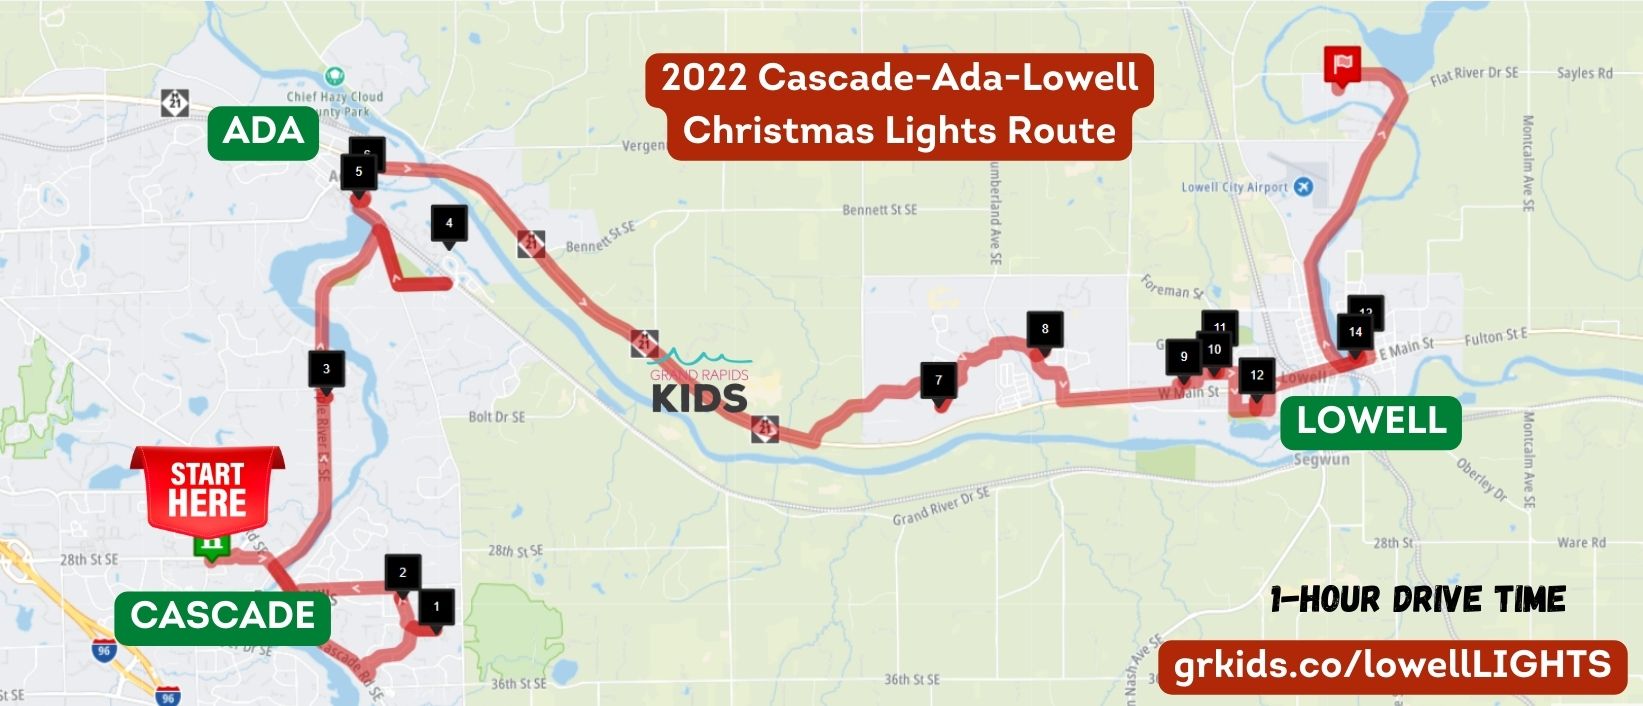 Cascade-Ada-Lowell Christmas Lights Route 2022